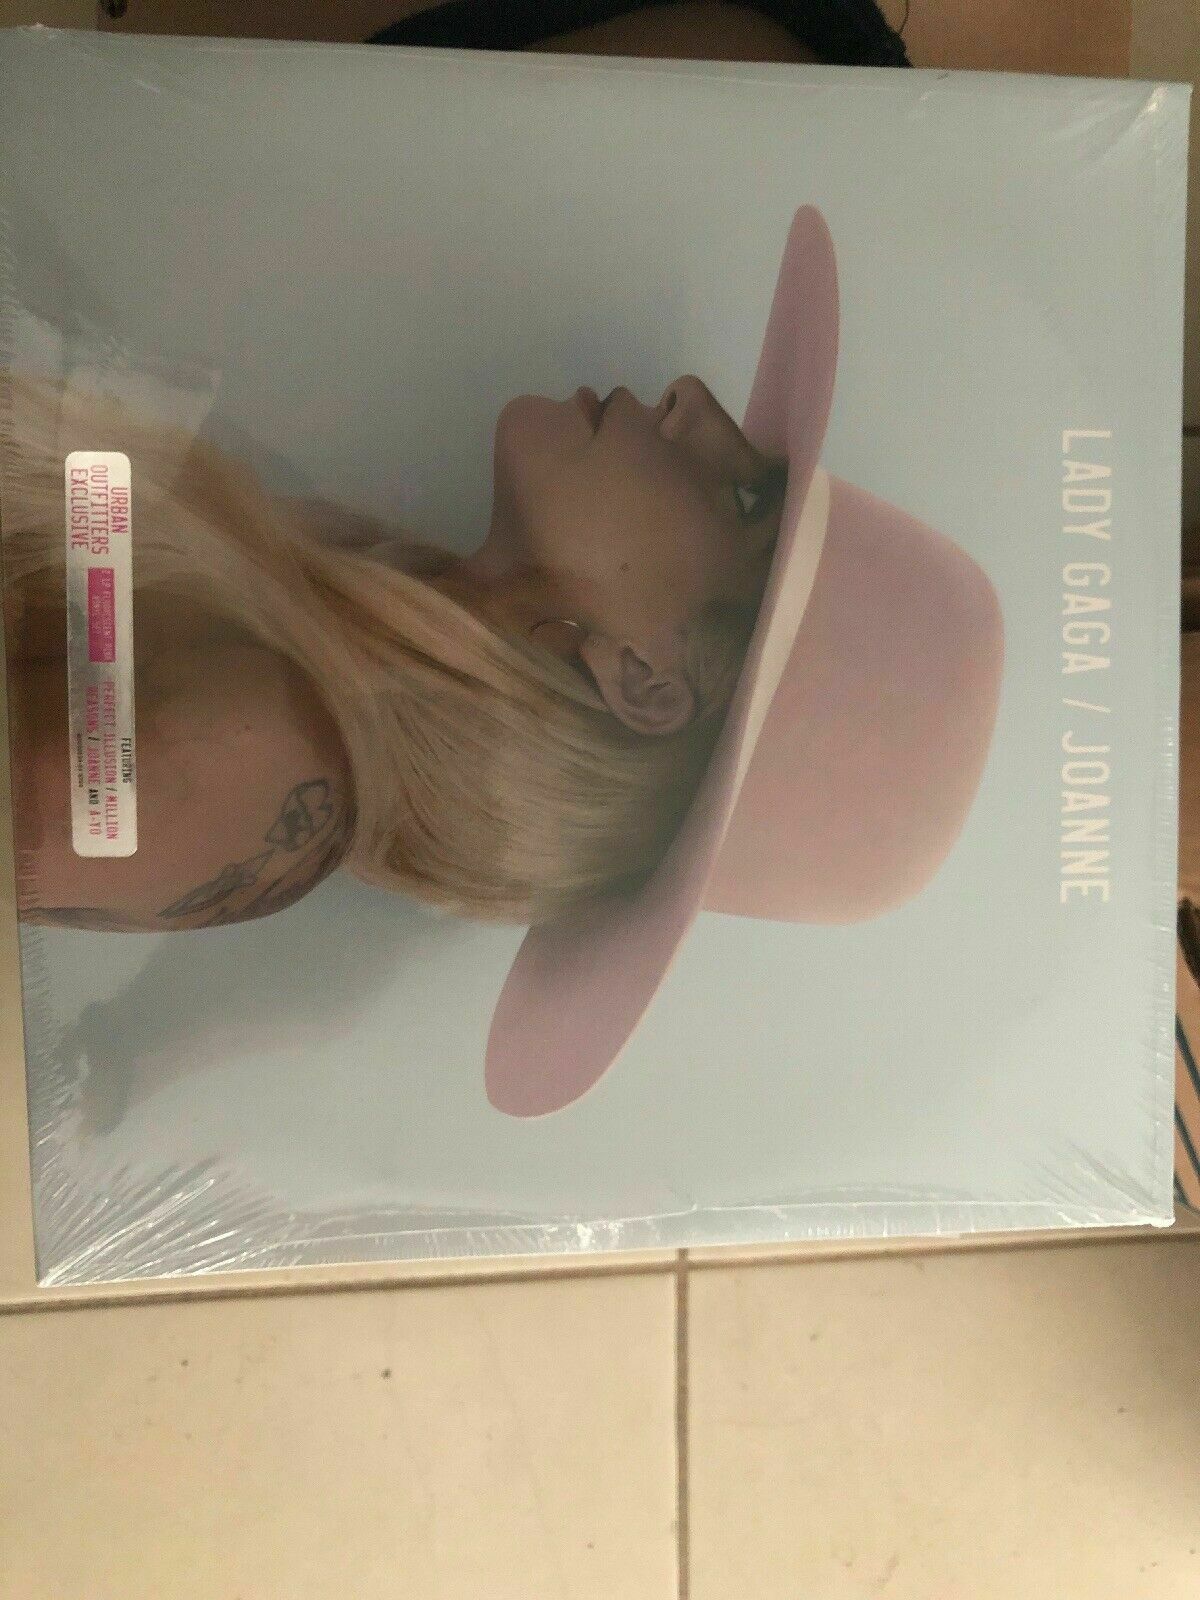  Lady Gaga Joanne Rosa Fluorescente 2 Lp Vinilo Set-Urban  Outfitters Exclusivo - auction details